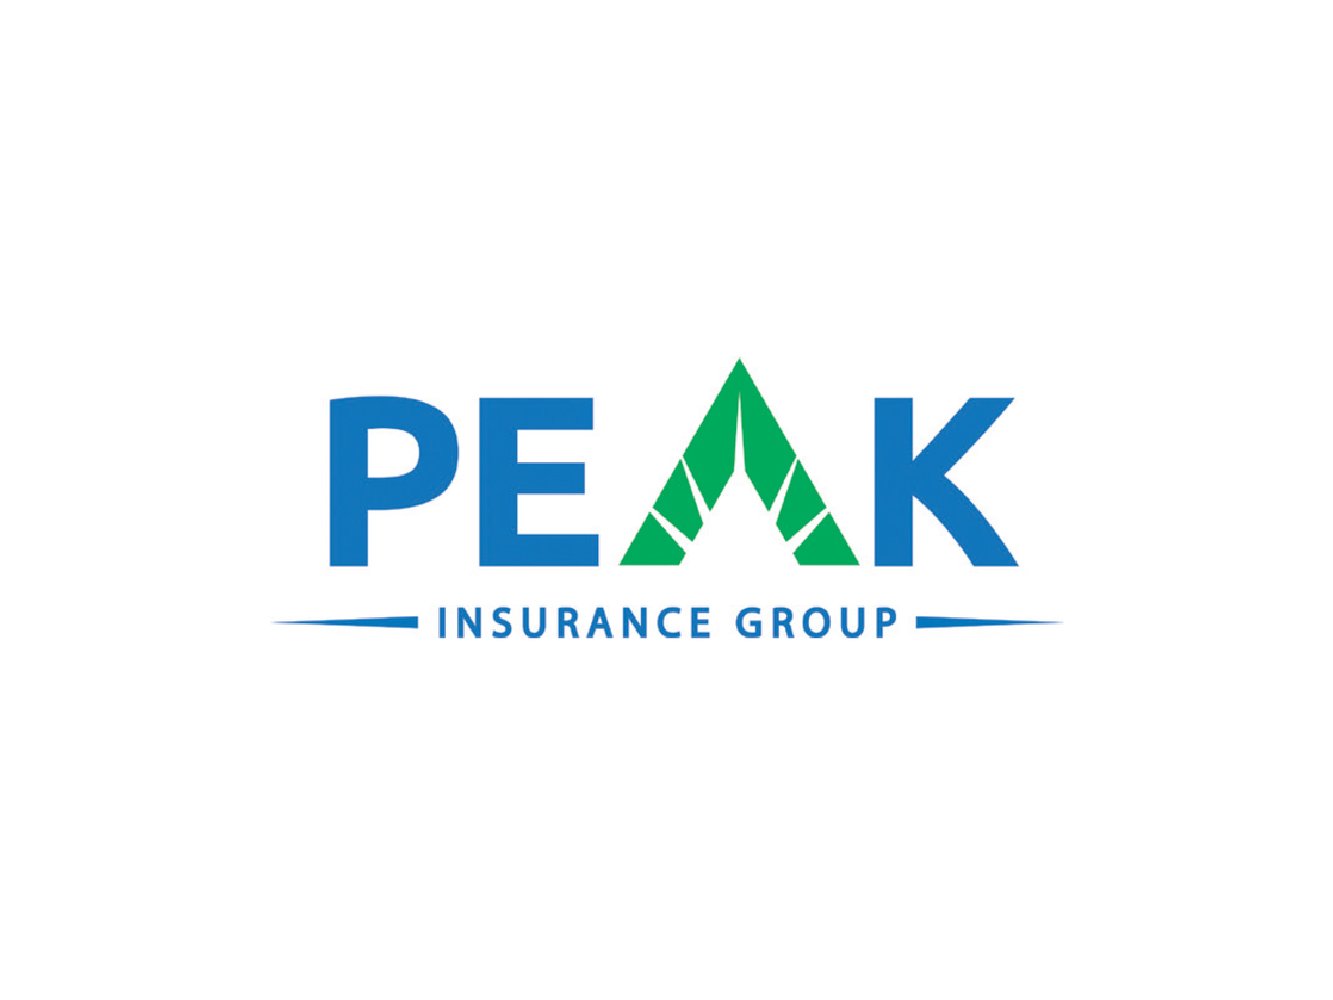 Peak Insurance